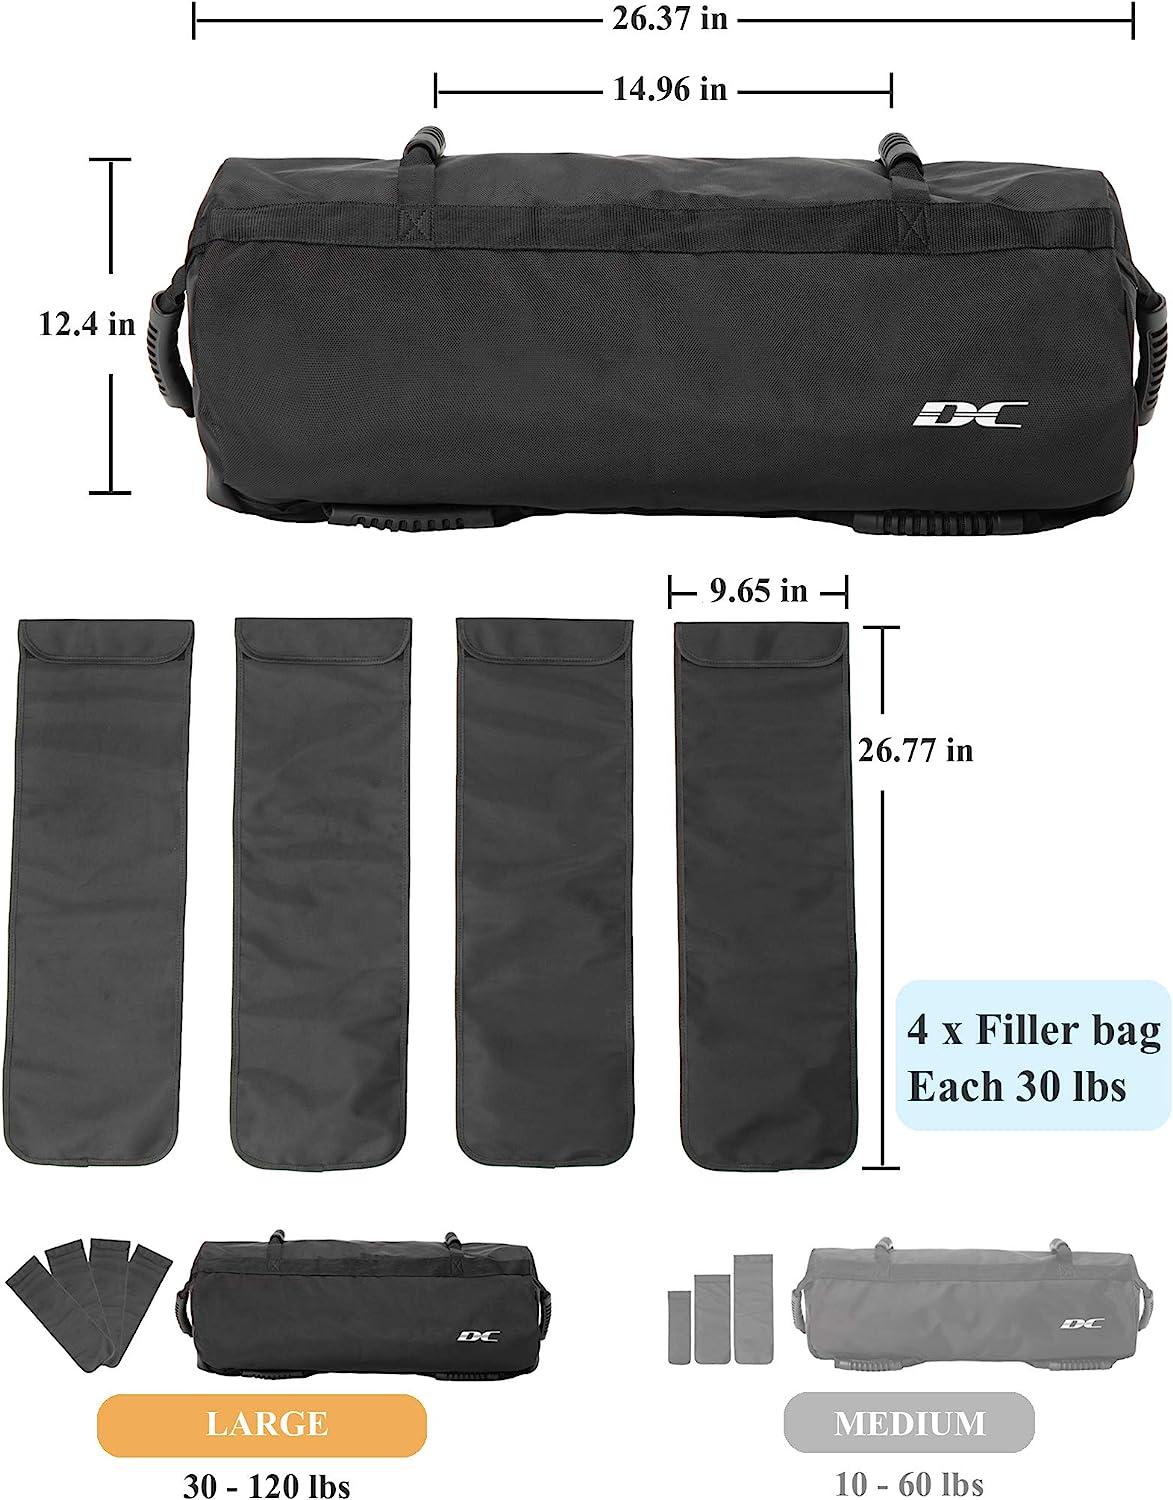 Sandbag Weight Training Power Bag with Handles,Zipper Weight Adjustable  Exercise